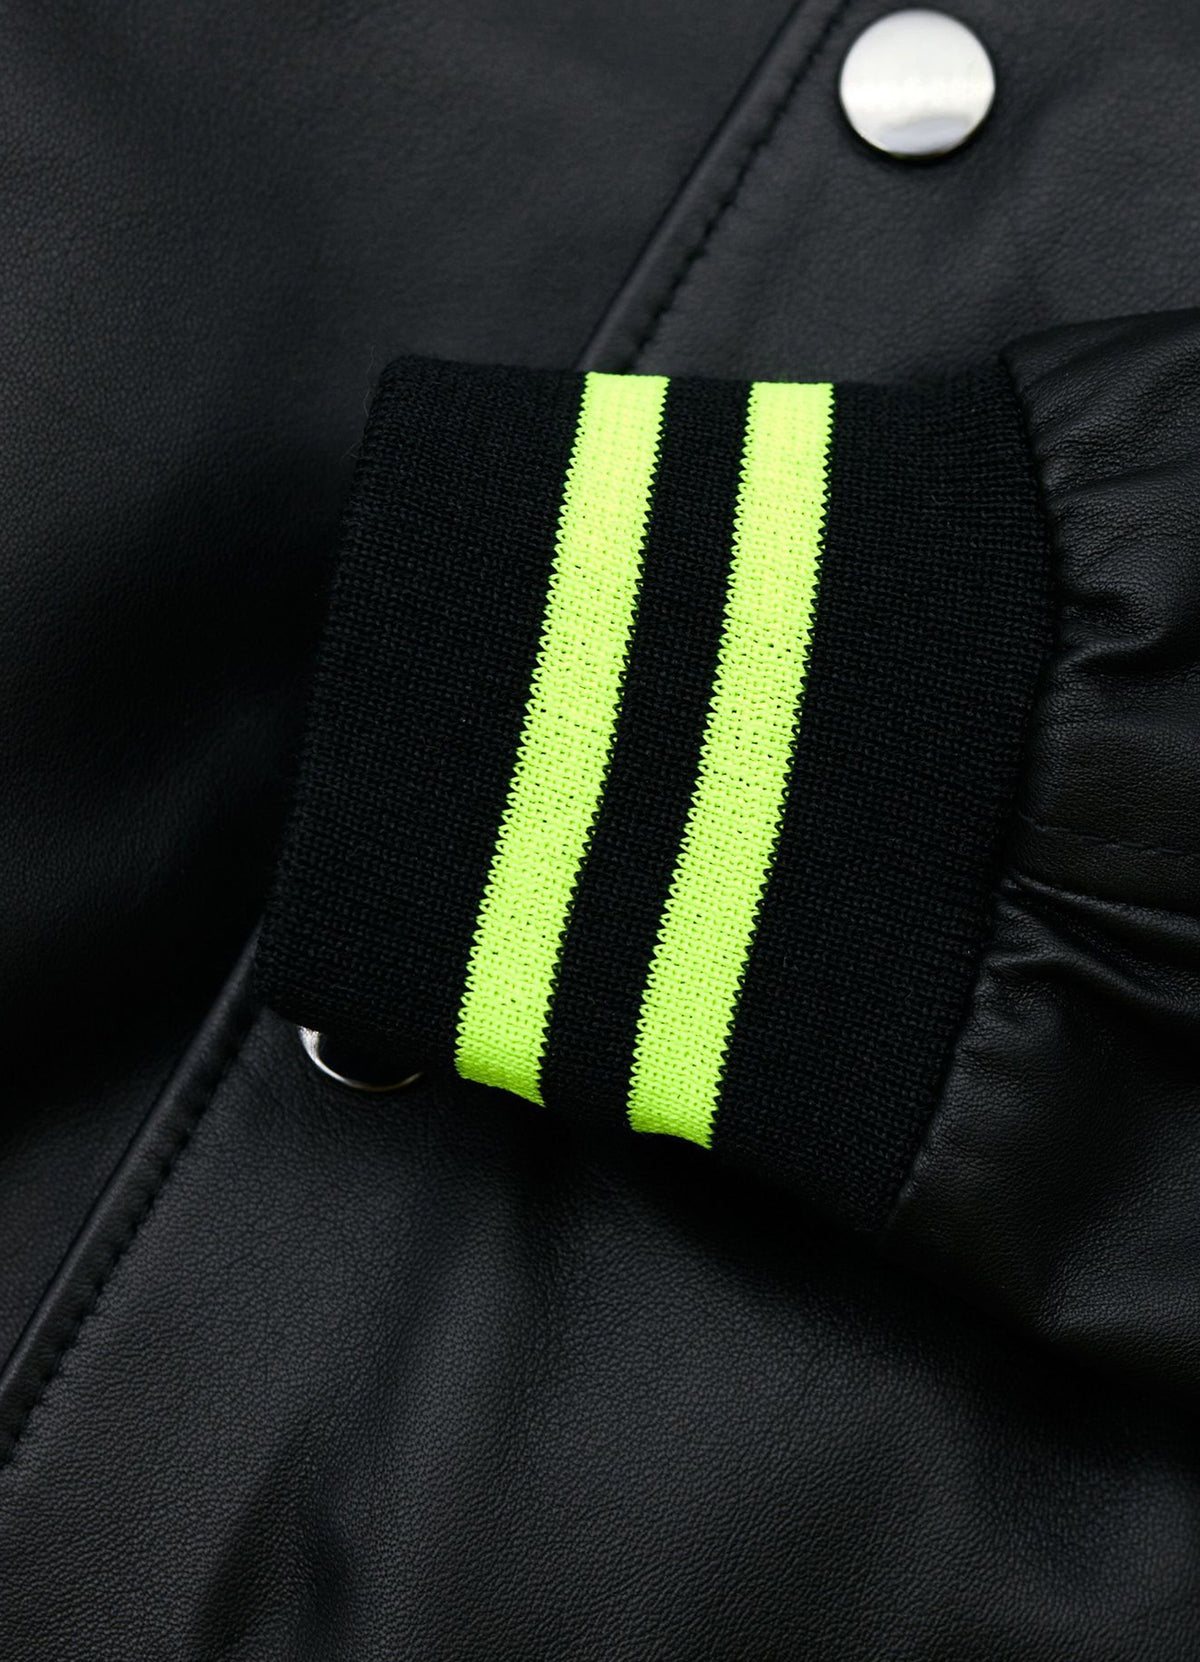 Mens Neon and Black Varsity Leather Jacket | Elite Jacket